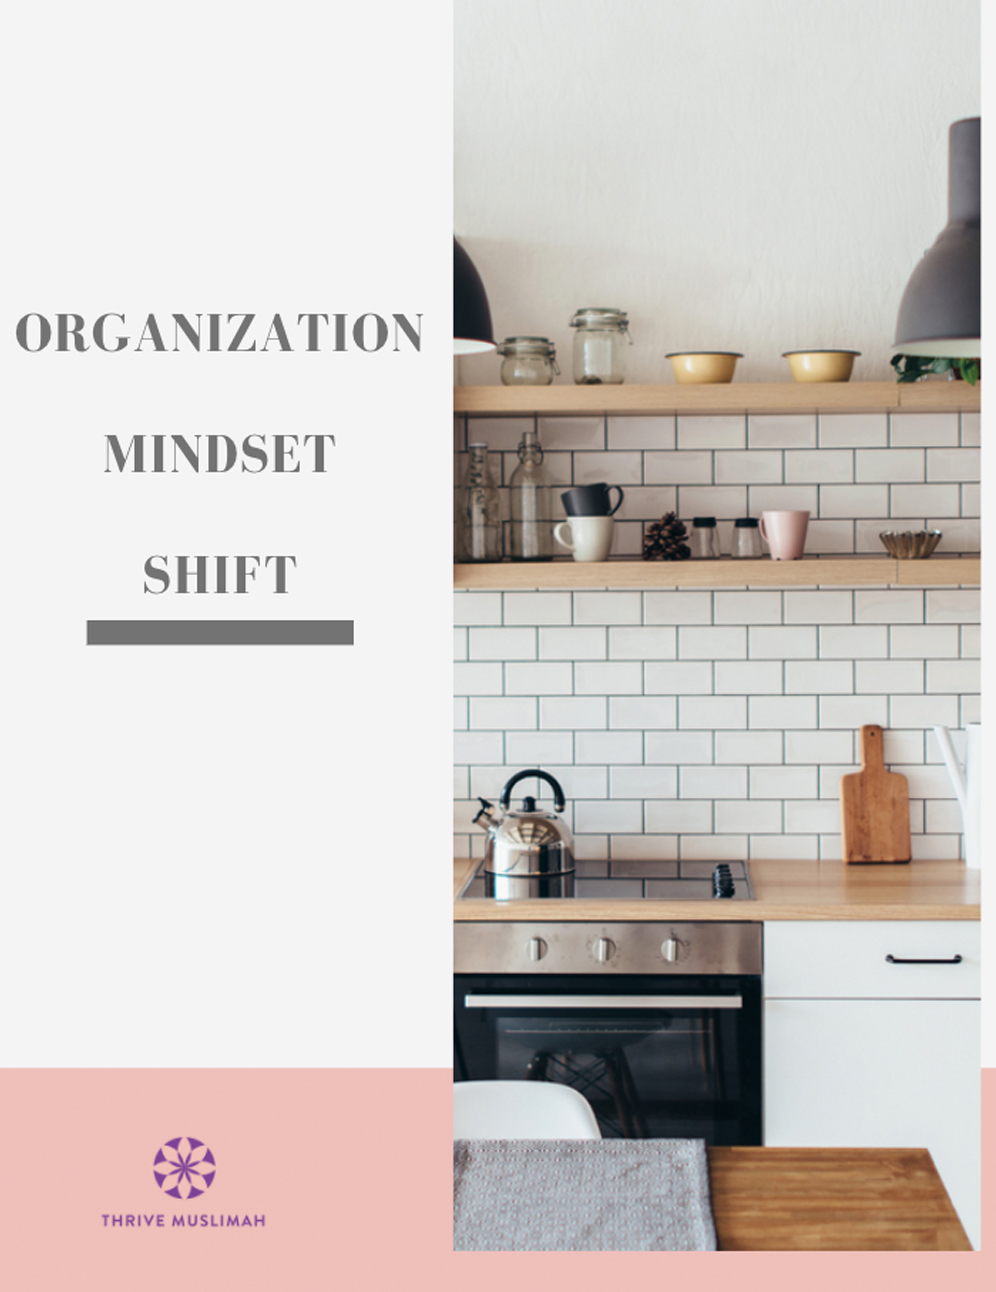 Organization Mindset Shift